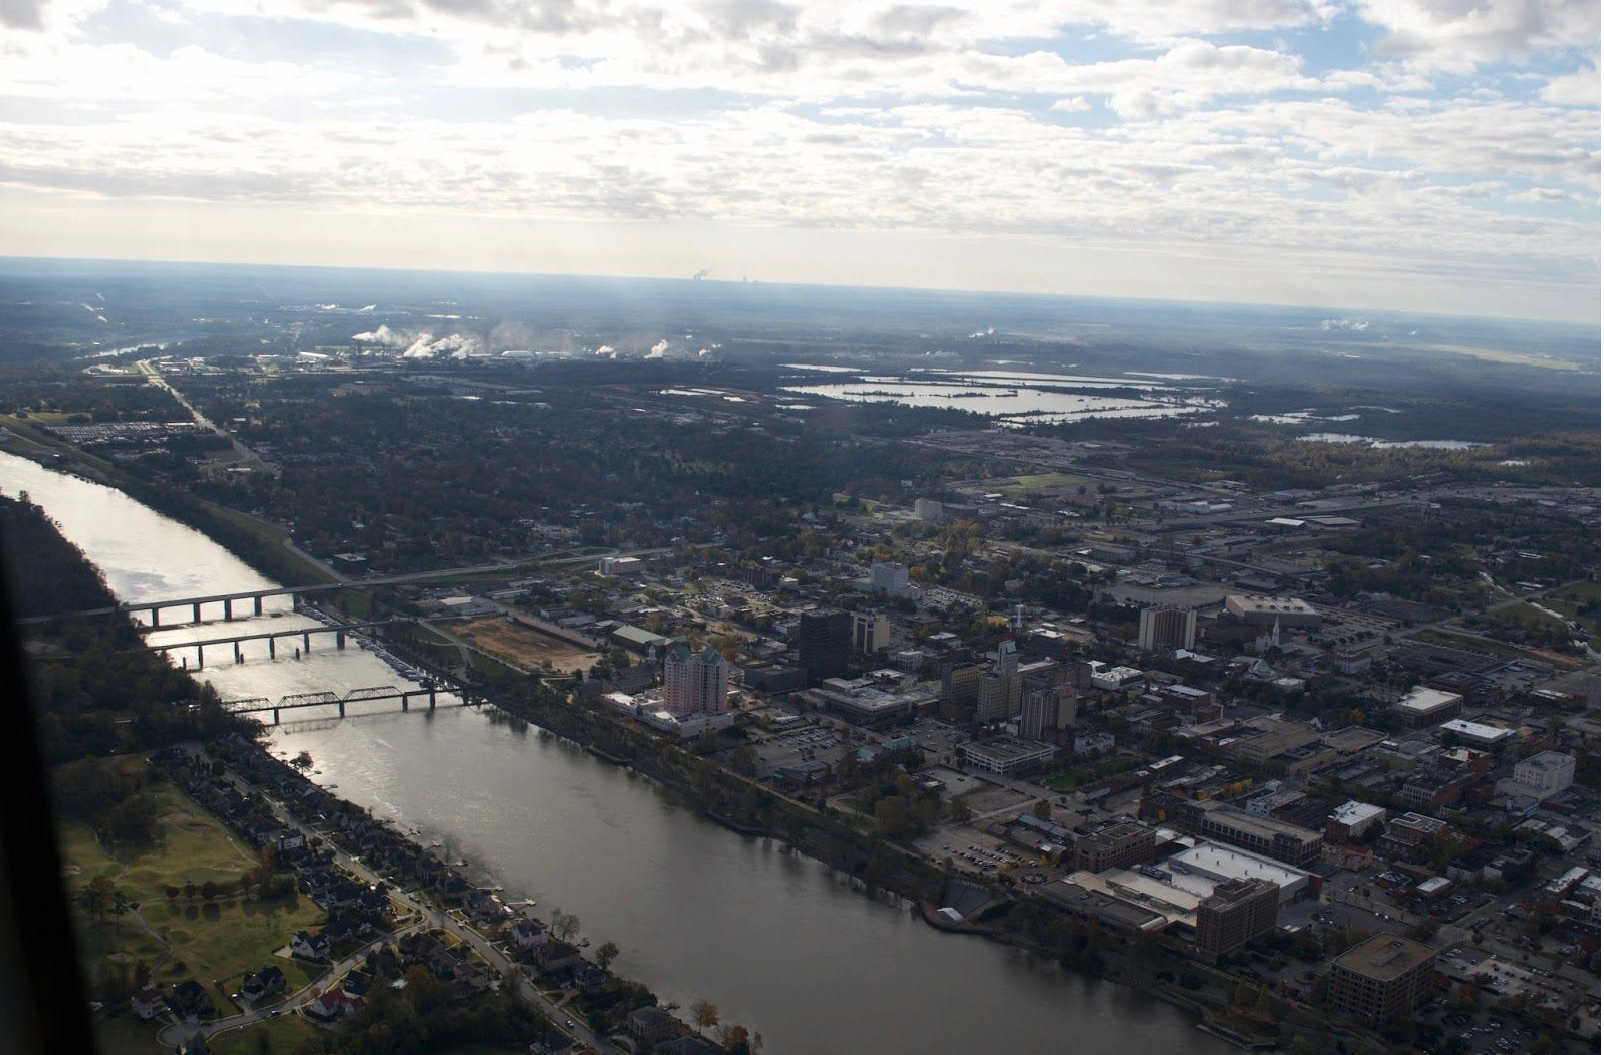 https://www.augustatomorrow.com/wp-content/uploads/2017/09/Savannah-River-Aerial-Overlooking-City-of-Augusta.jpg